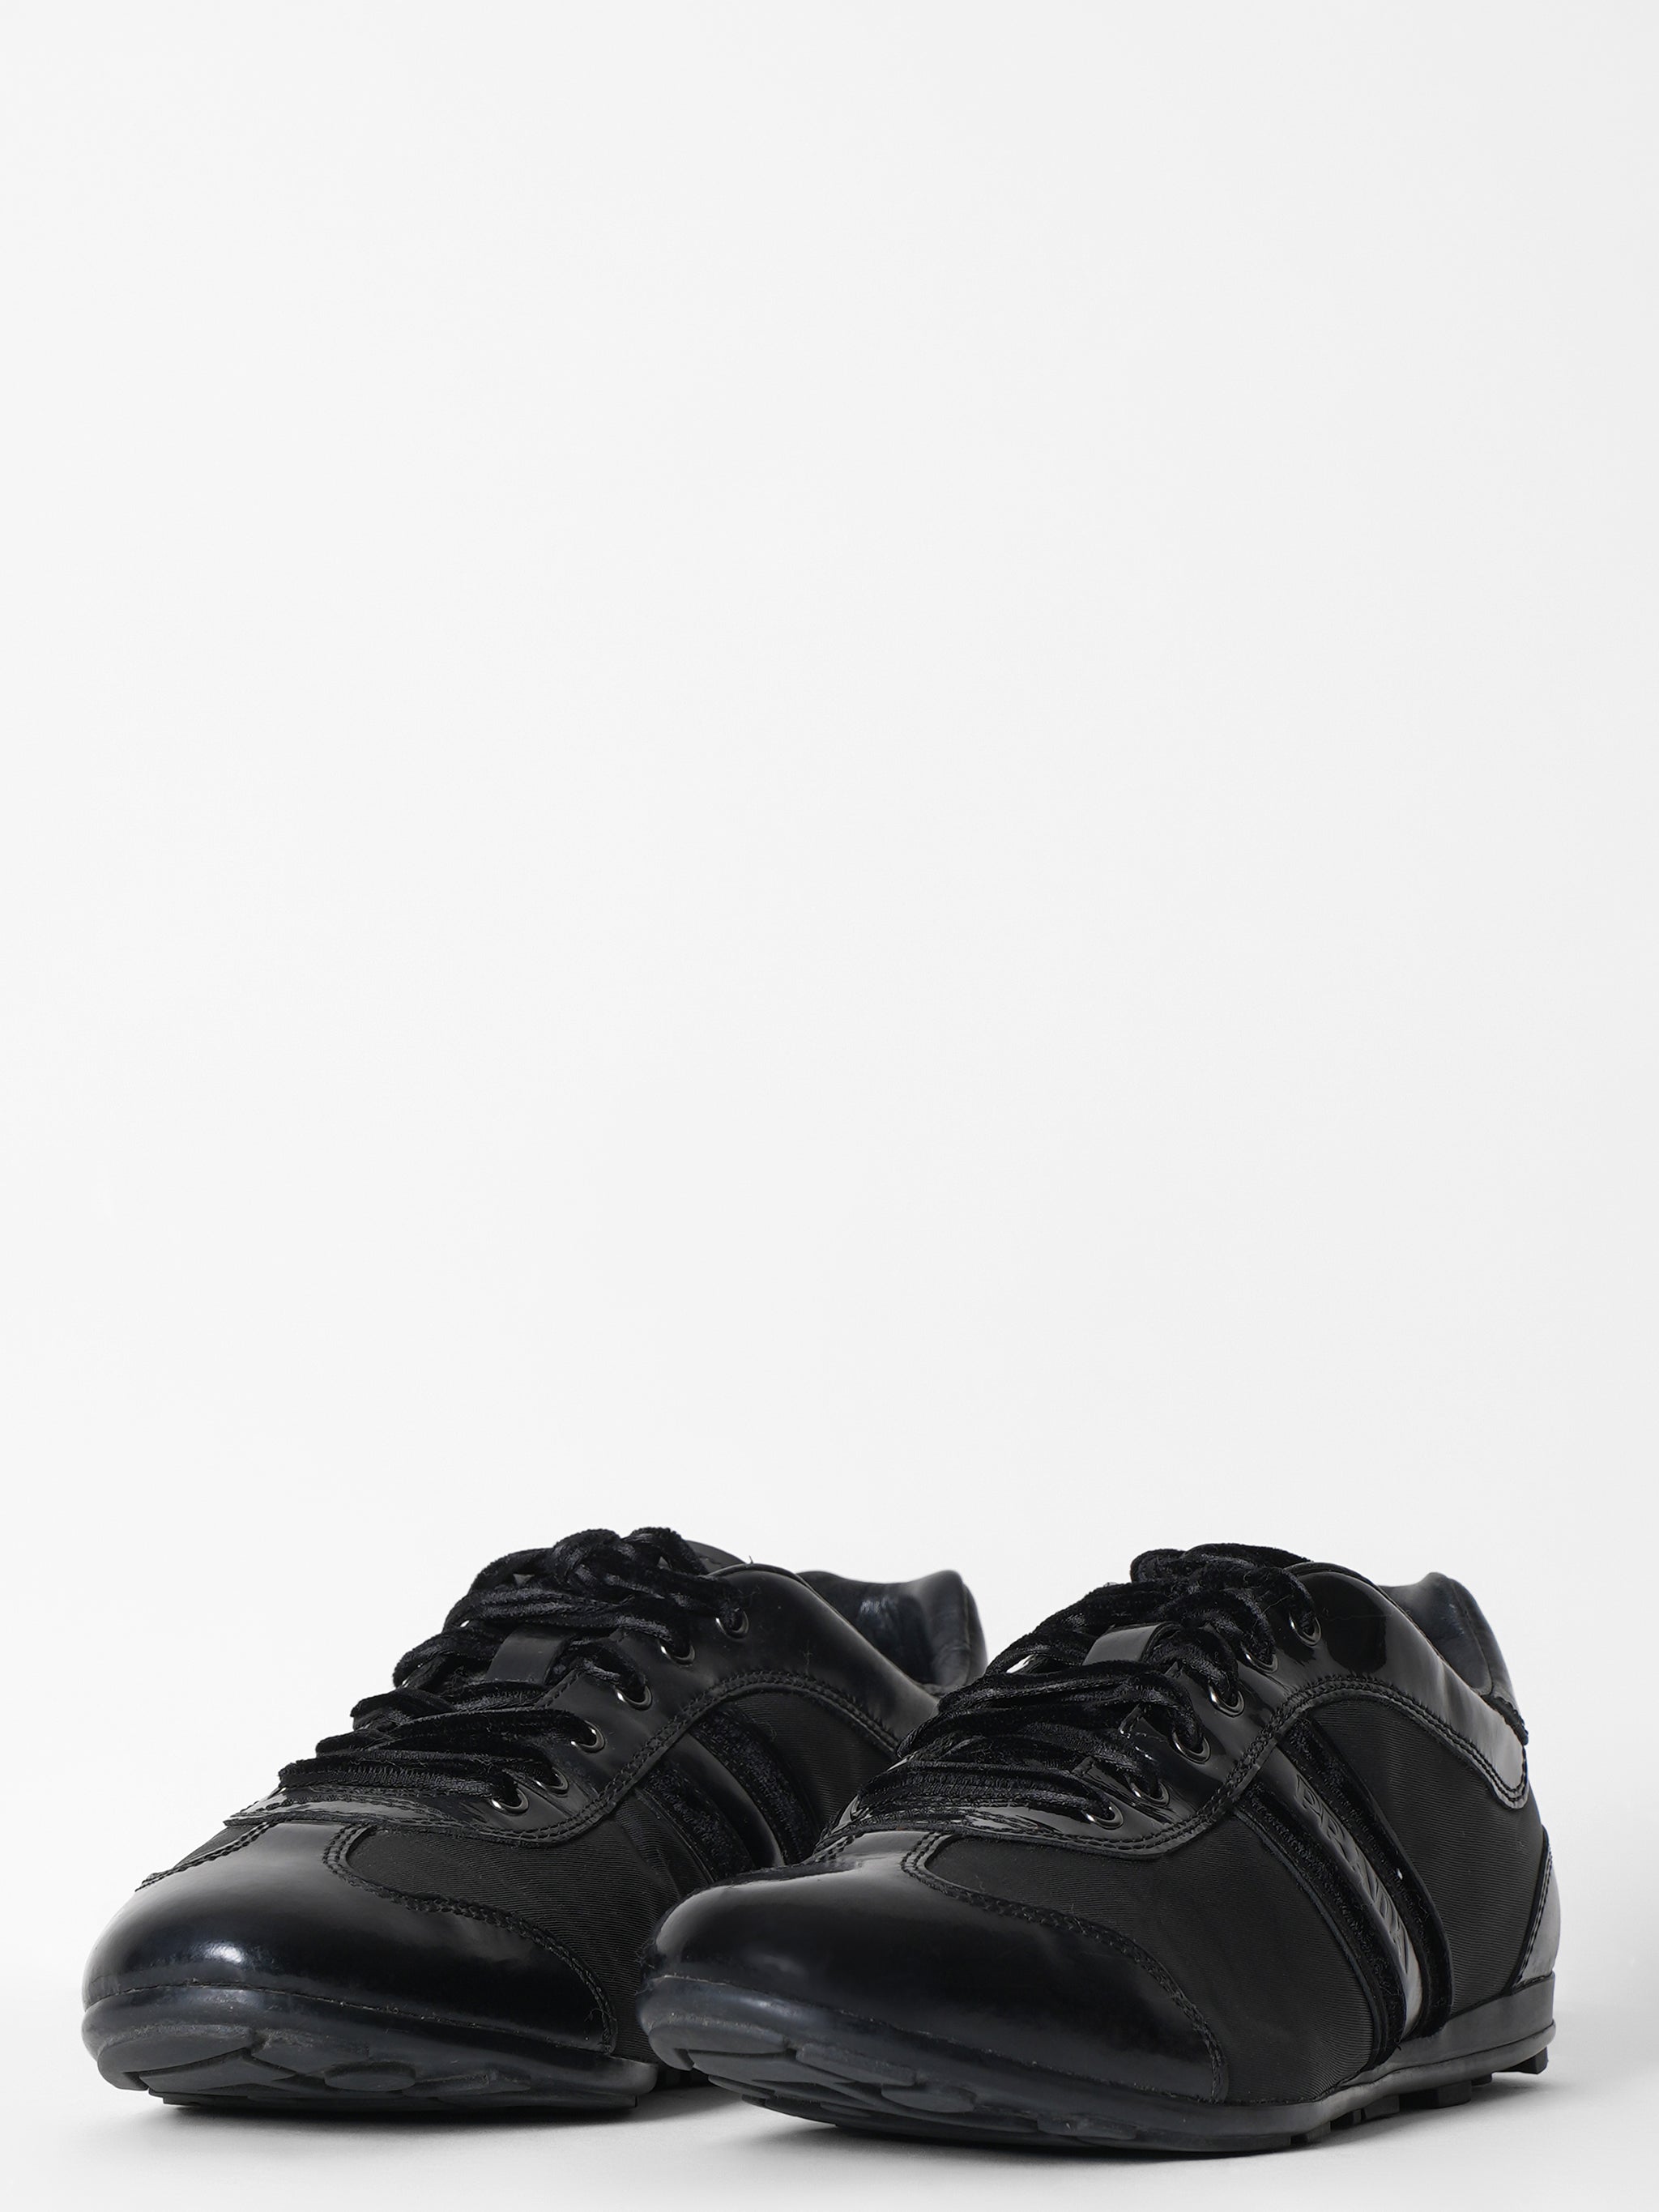 Prada Black Lace Up Shoes